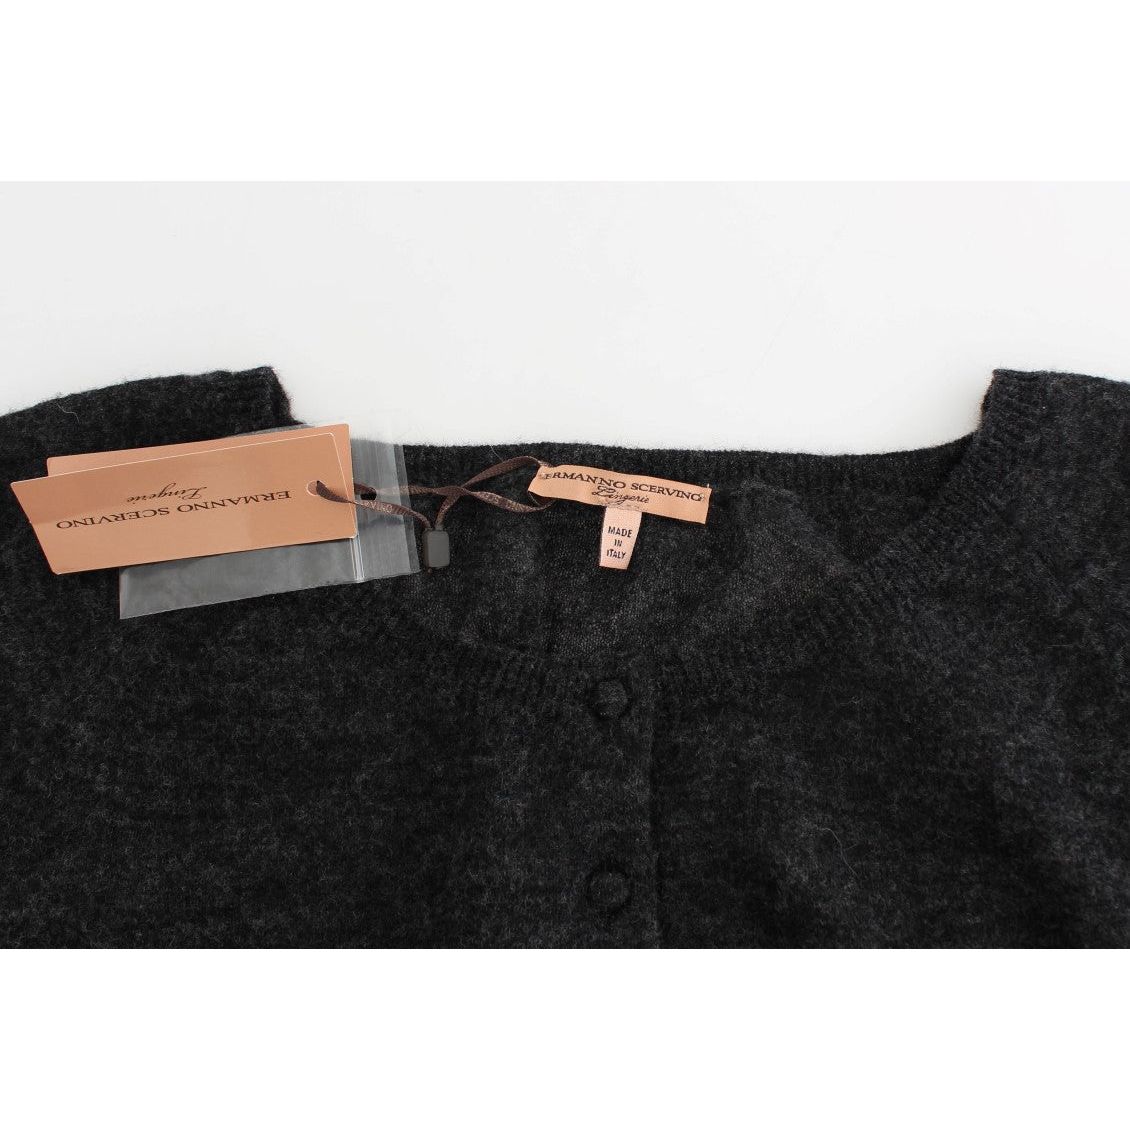 Ermanno Scervino Chic Cropped Alpaca Wool Sweater gray-knit-wool-cardigan-sweater-1 184217-gray-knit-wool-cardigan-sweater-2-5.jpg